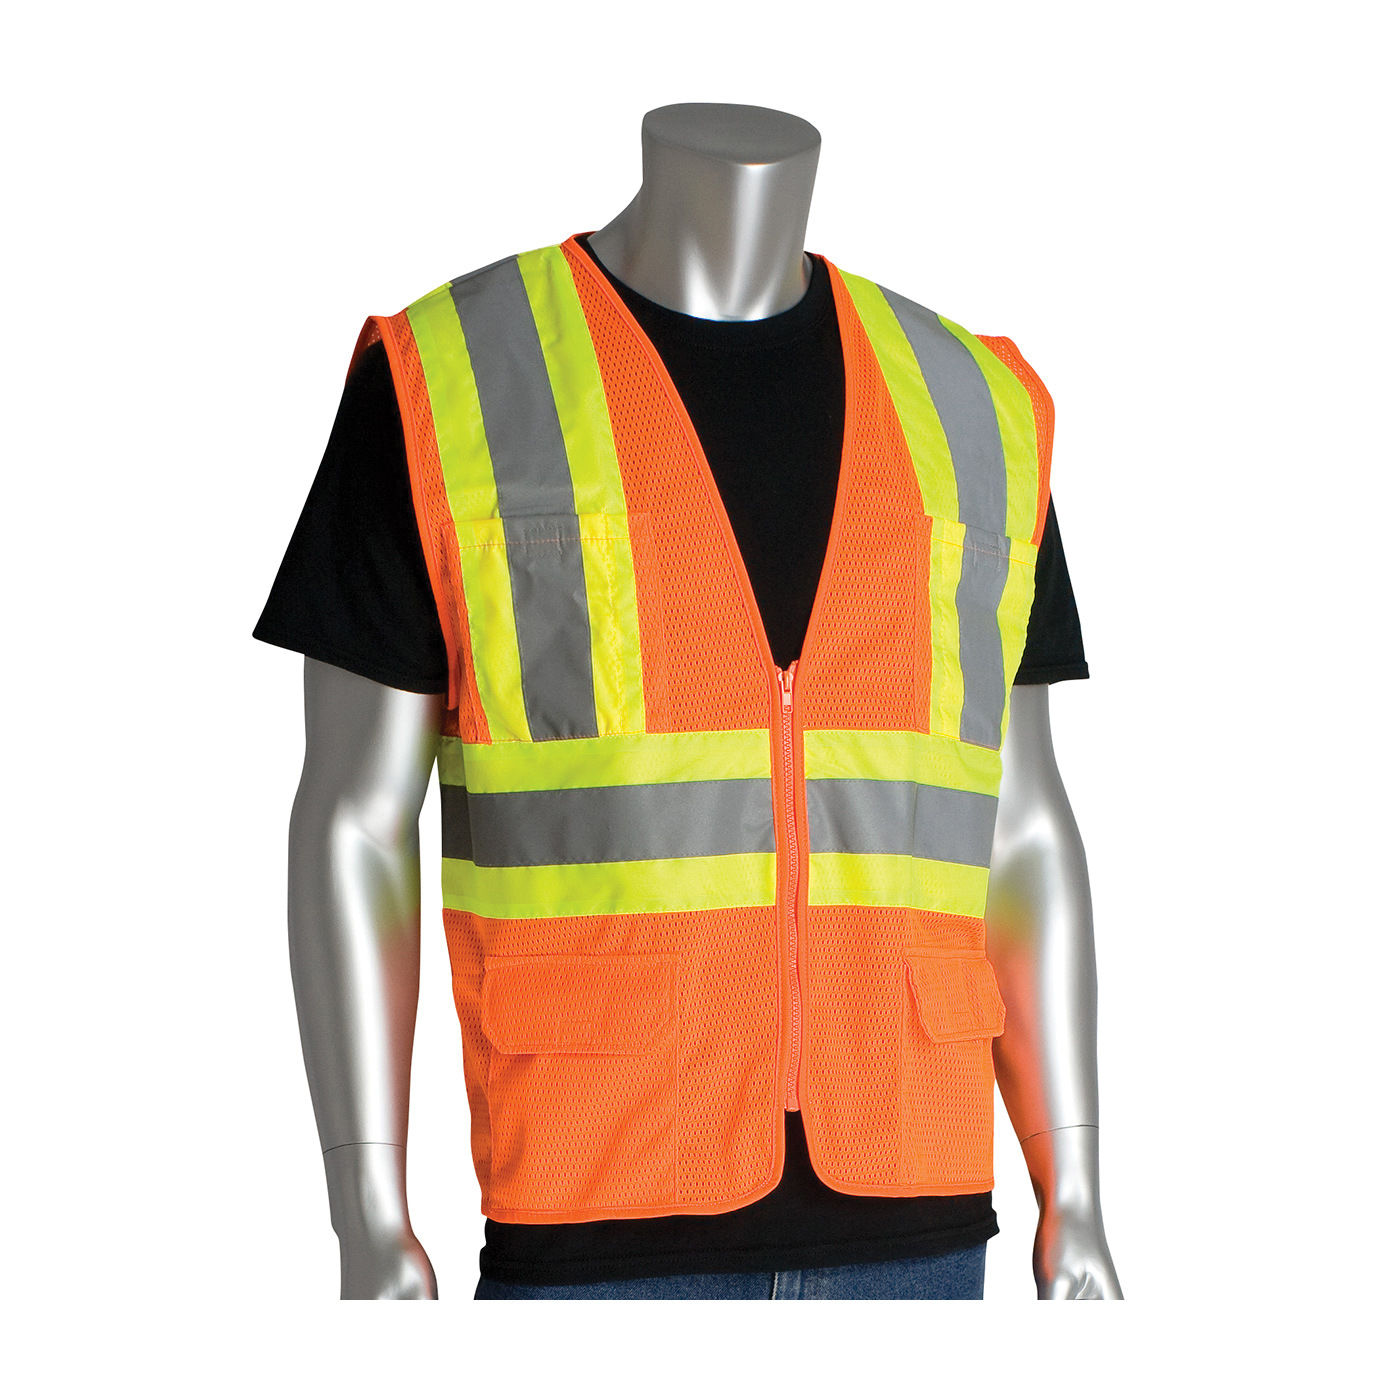 PIP® 302-MVZPOR-S 2-Tone Safety Vest, S, Hi-Viz Orange, Polyester Mesh, Zipper Closure, 6 Pockets, ANSI Class: Class 2, Specifications Met: ANSI 107 Type R